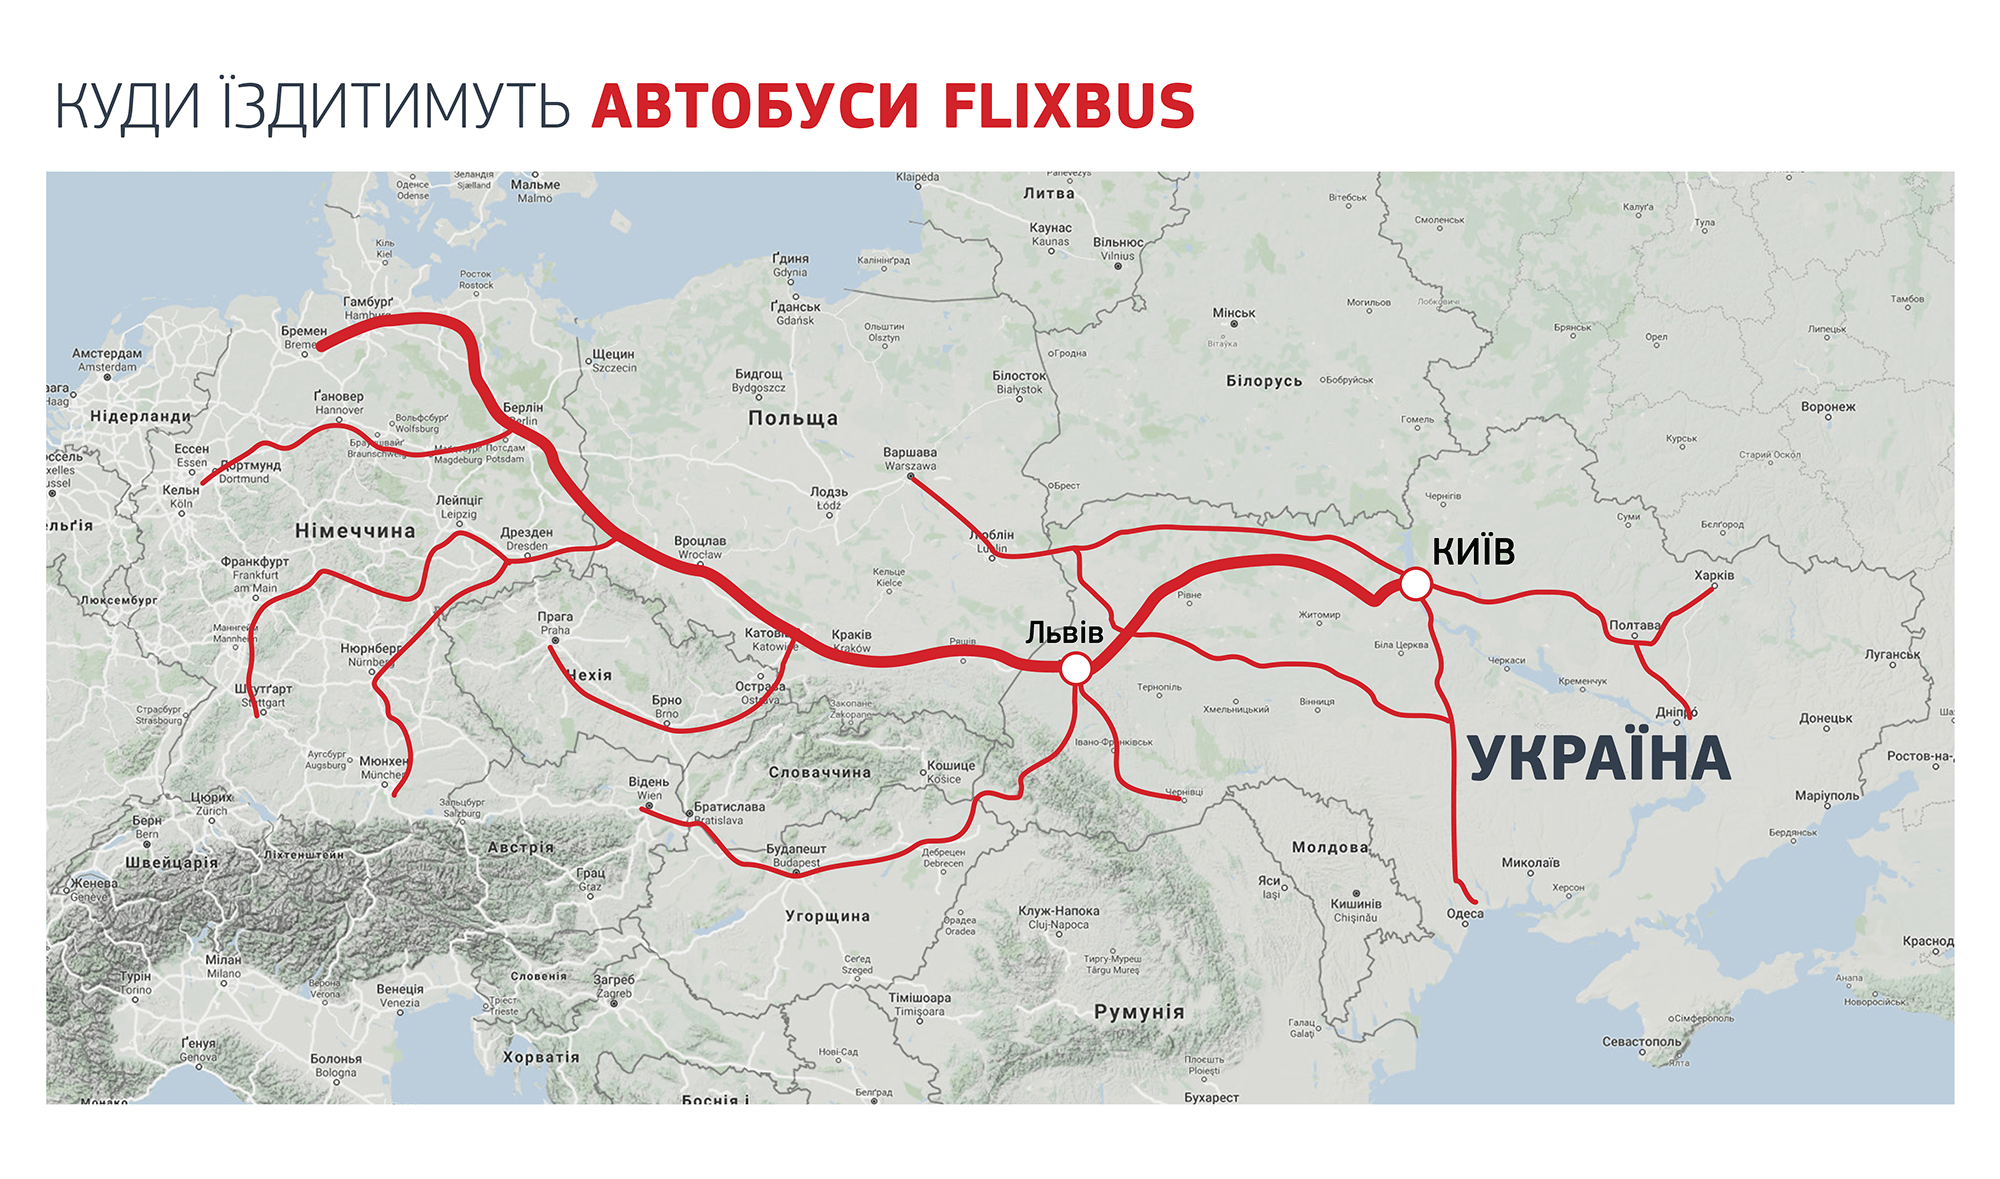 рейси FlixBus в Україні 2019